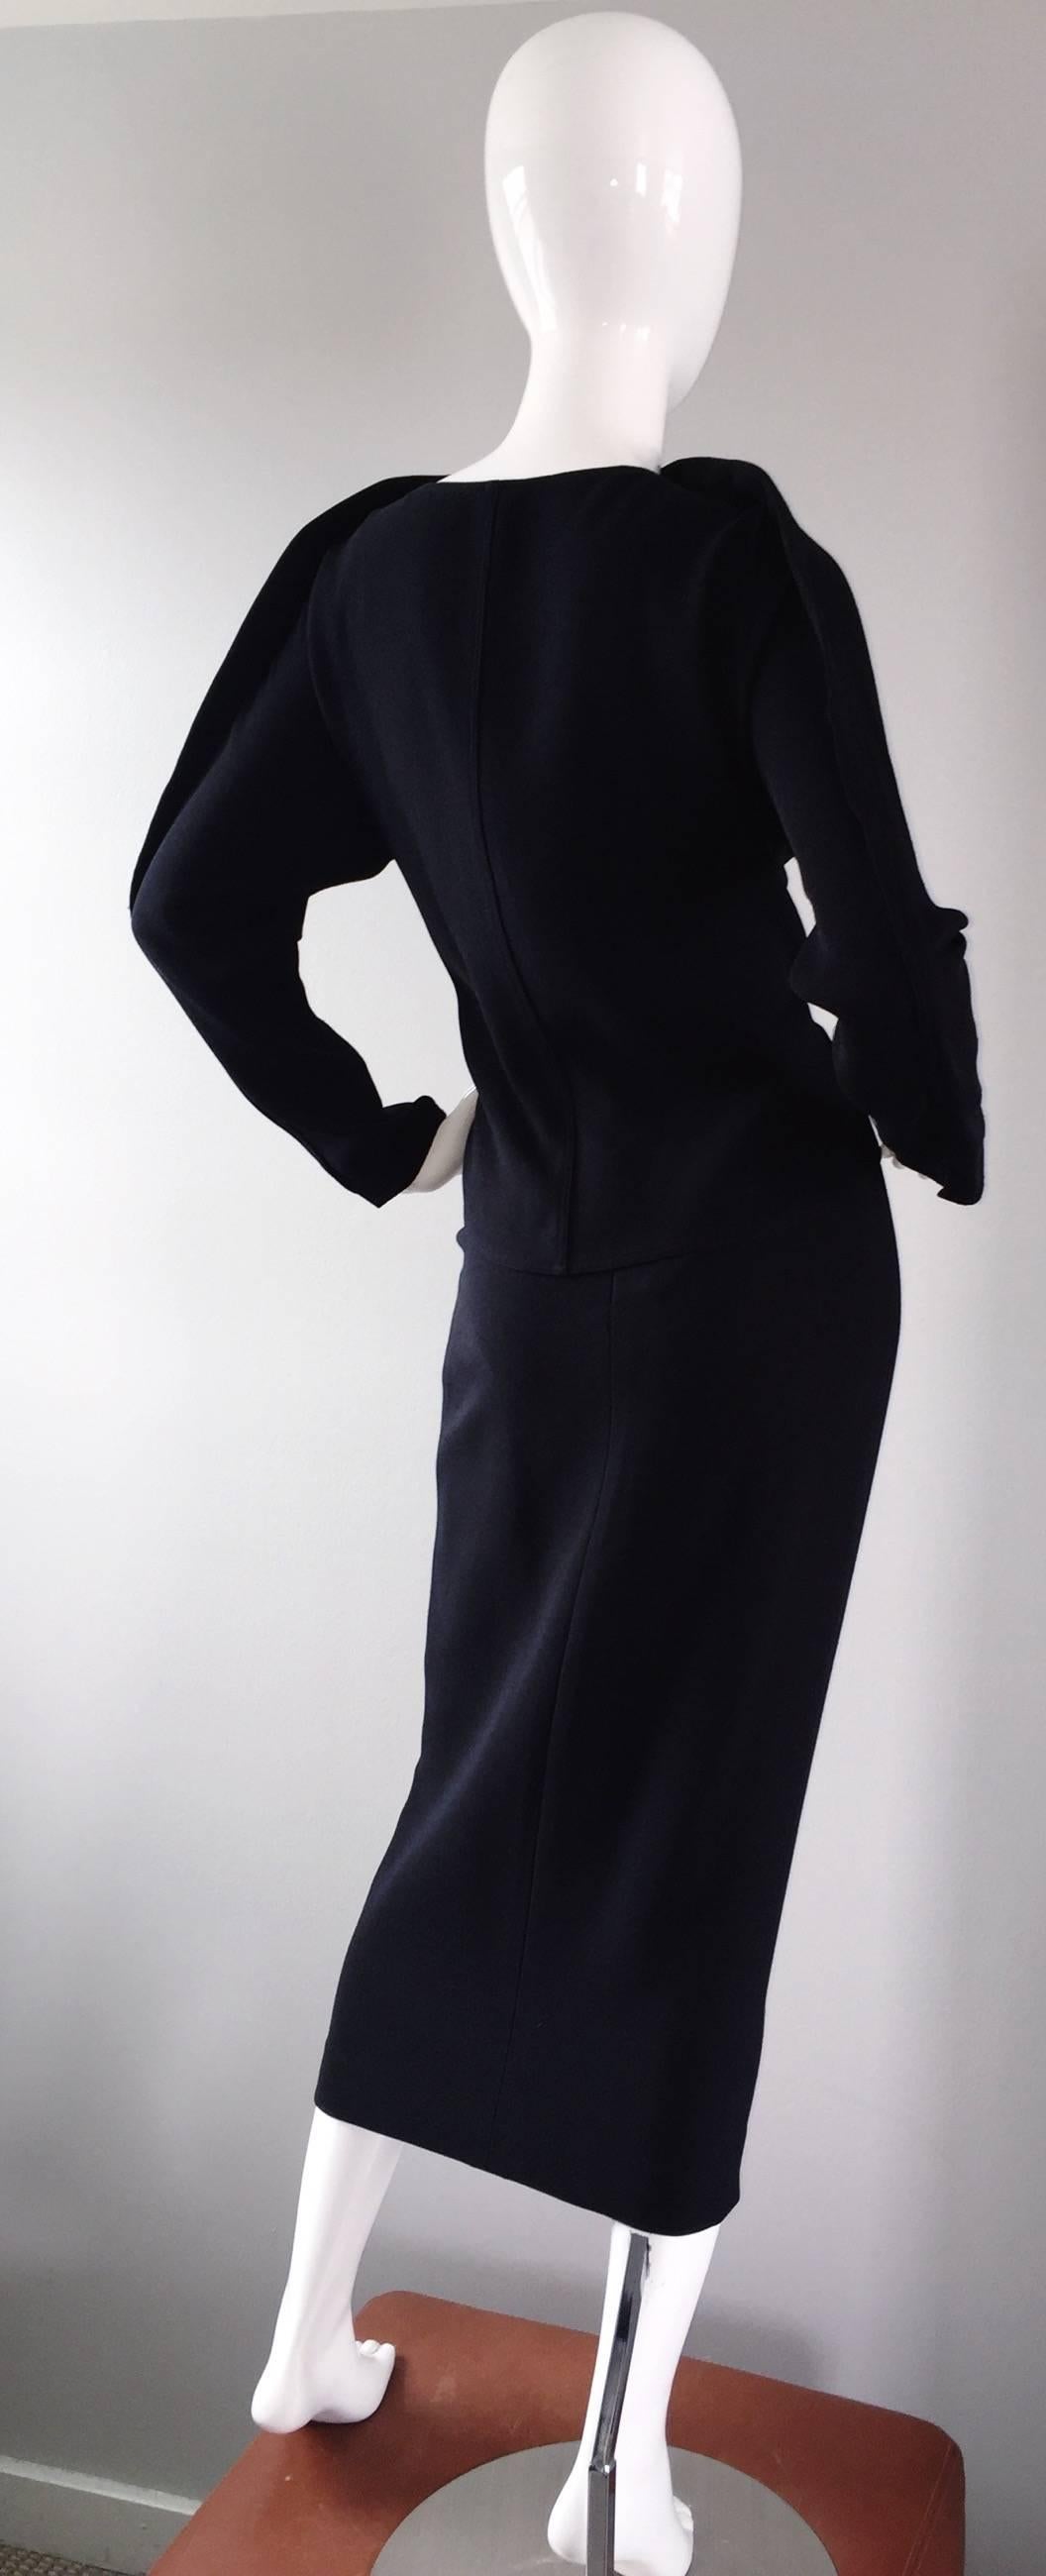 Important Rare Geoffrey Beene Minimalist Zipper Black Dress Set / Top & Skirt 1